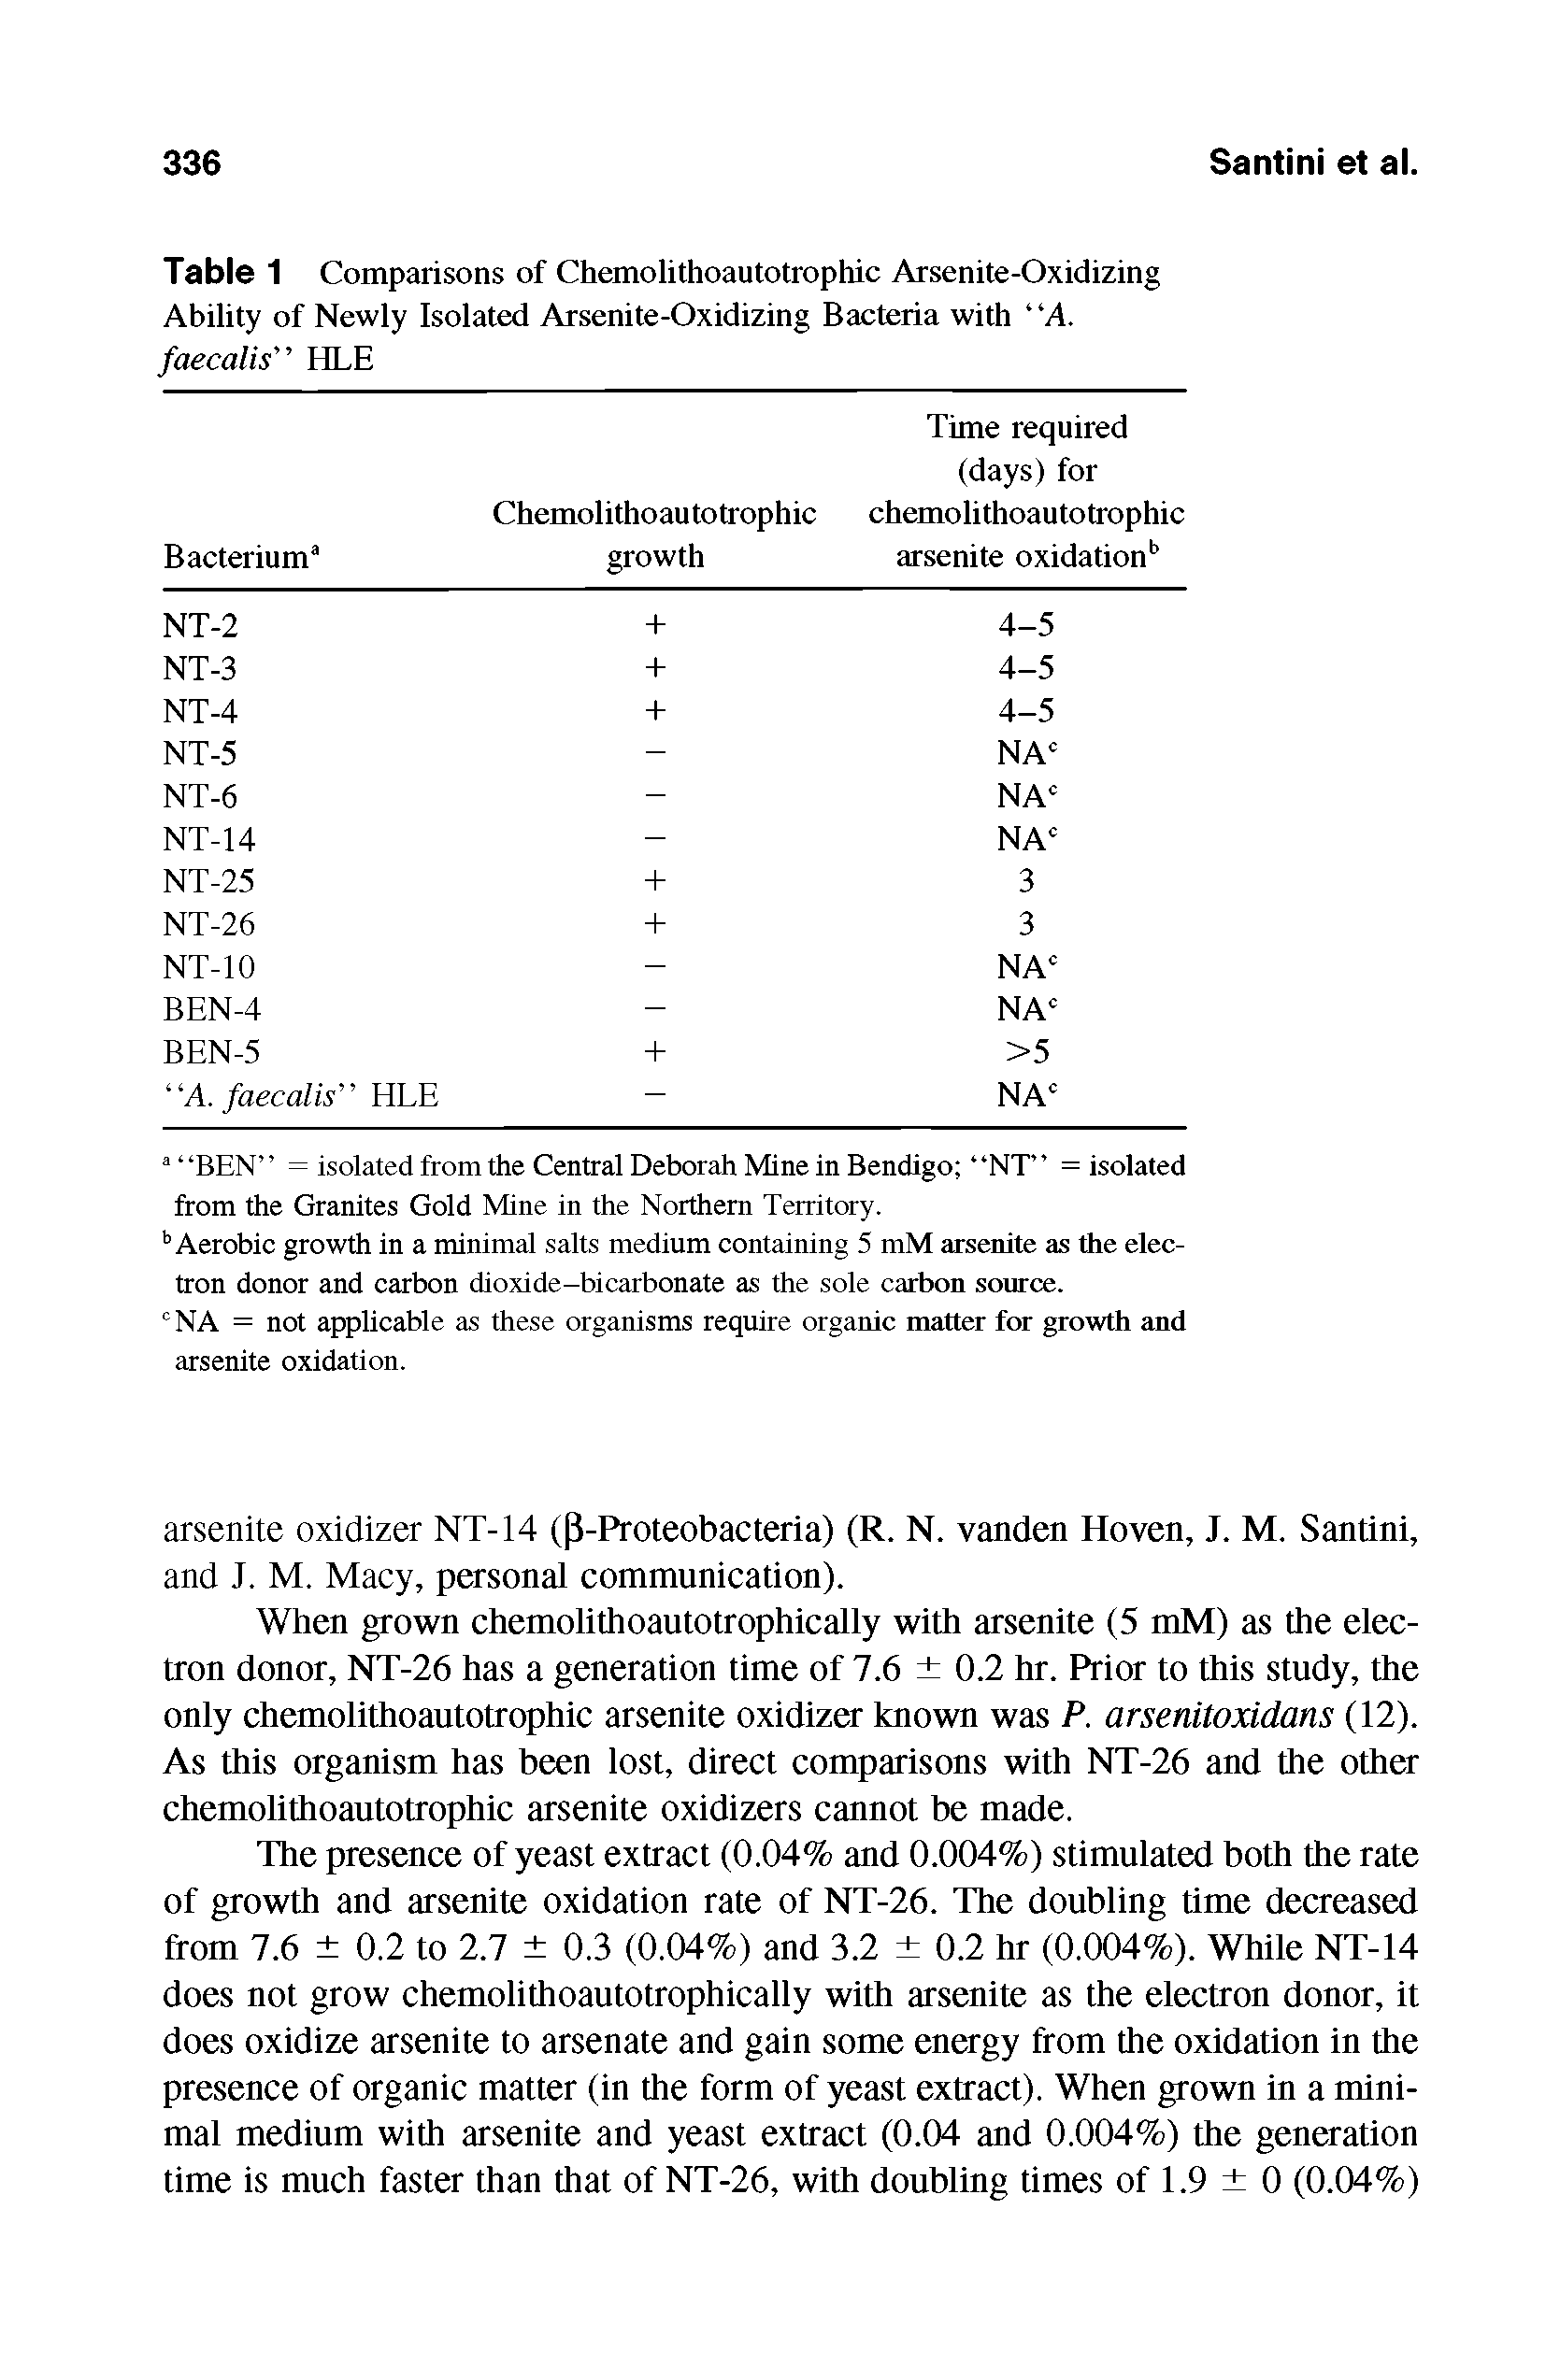 Table 1 Comparisons of Chemolithoautotrophic Arsenite-Oxidizing Ability of Newly Isolated Arsenite-Oxidizing Bacteria with A. faecalis HLE...